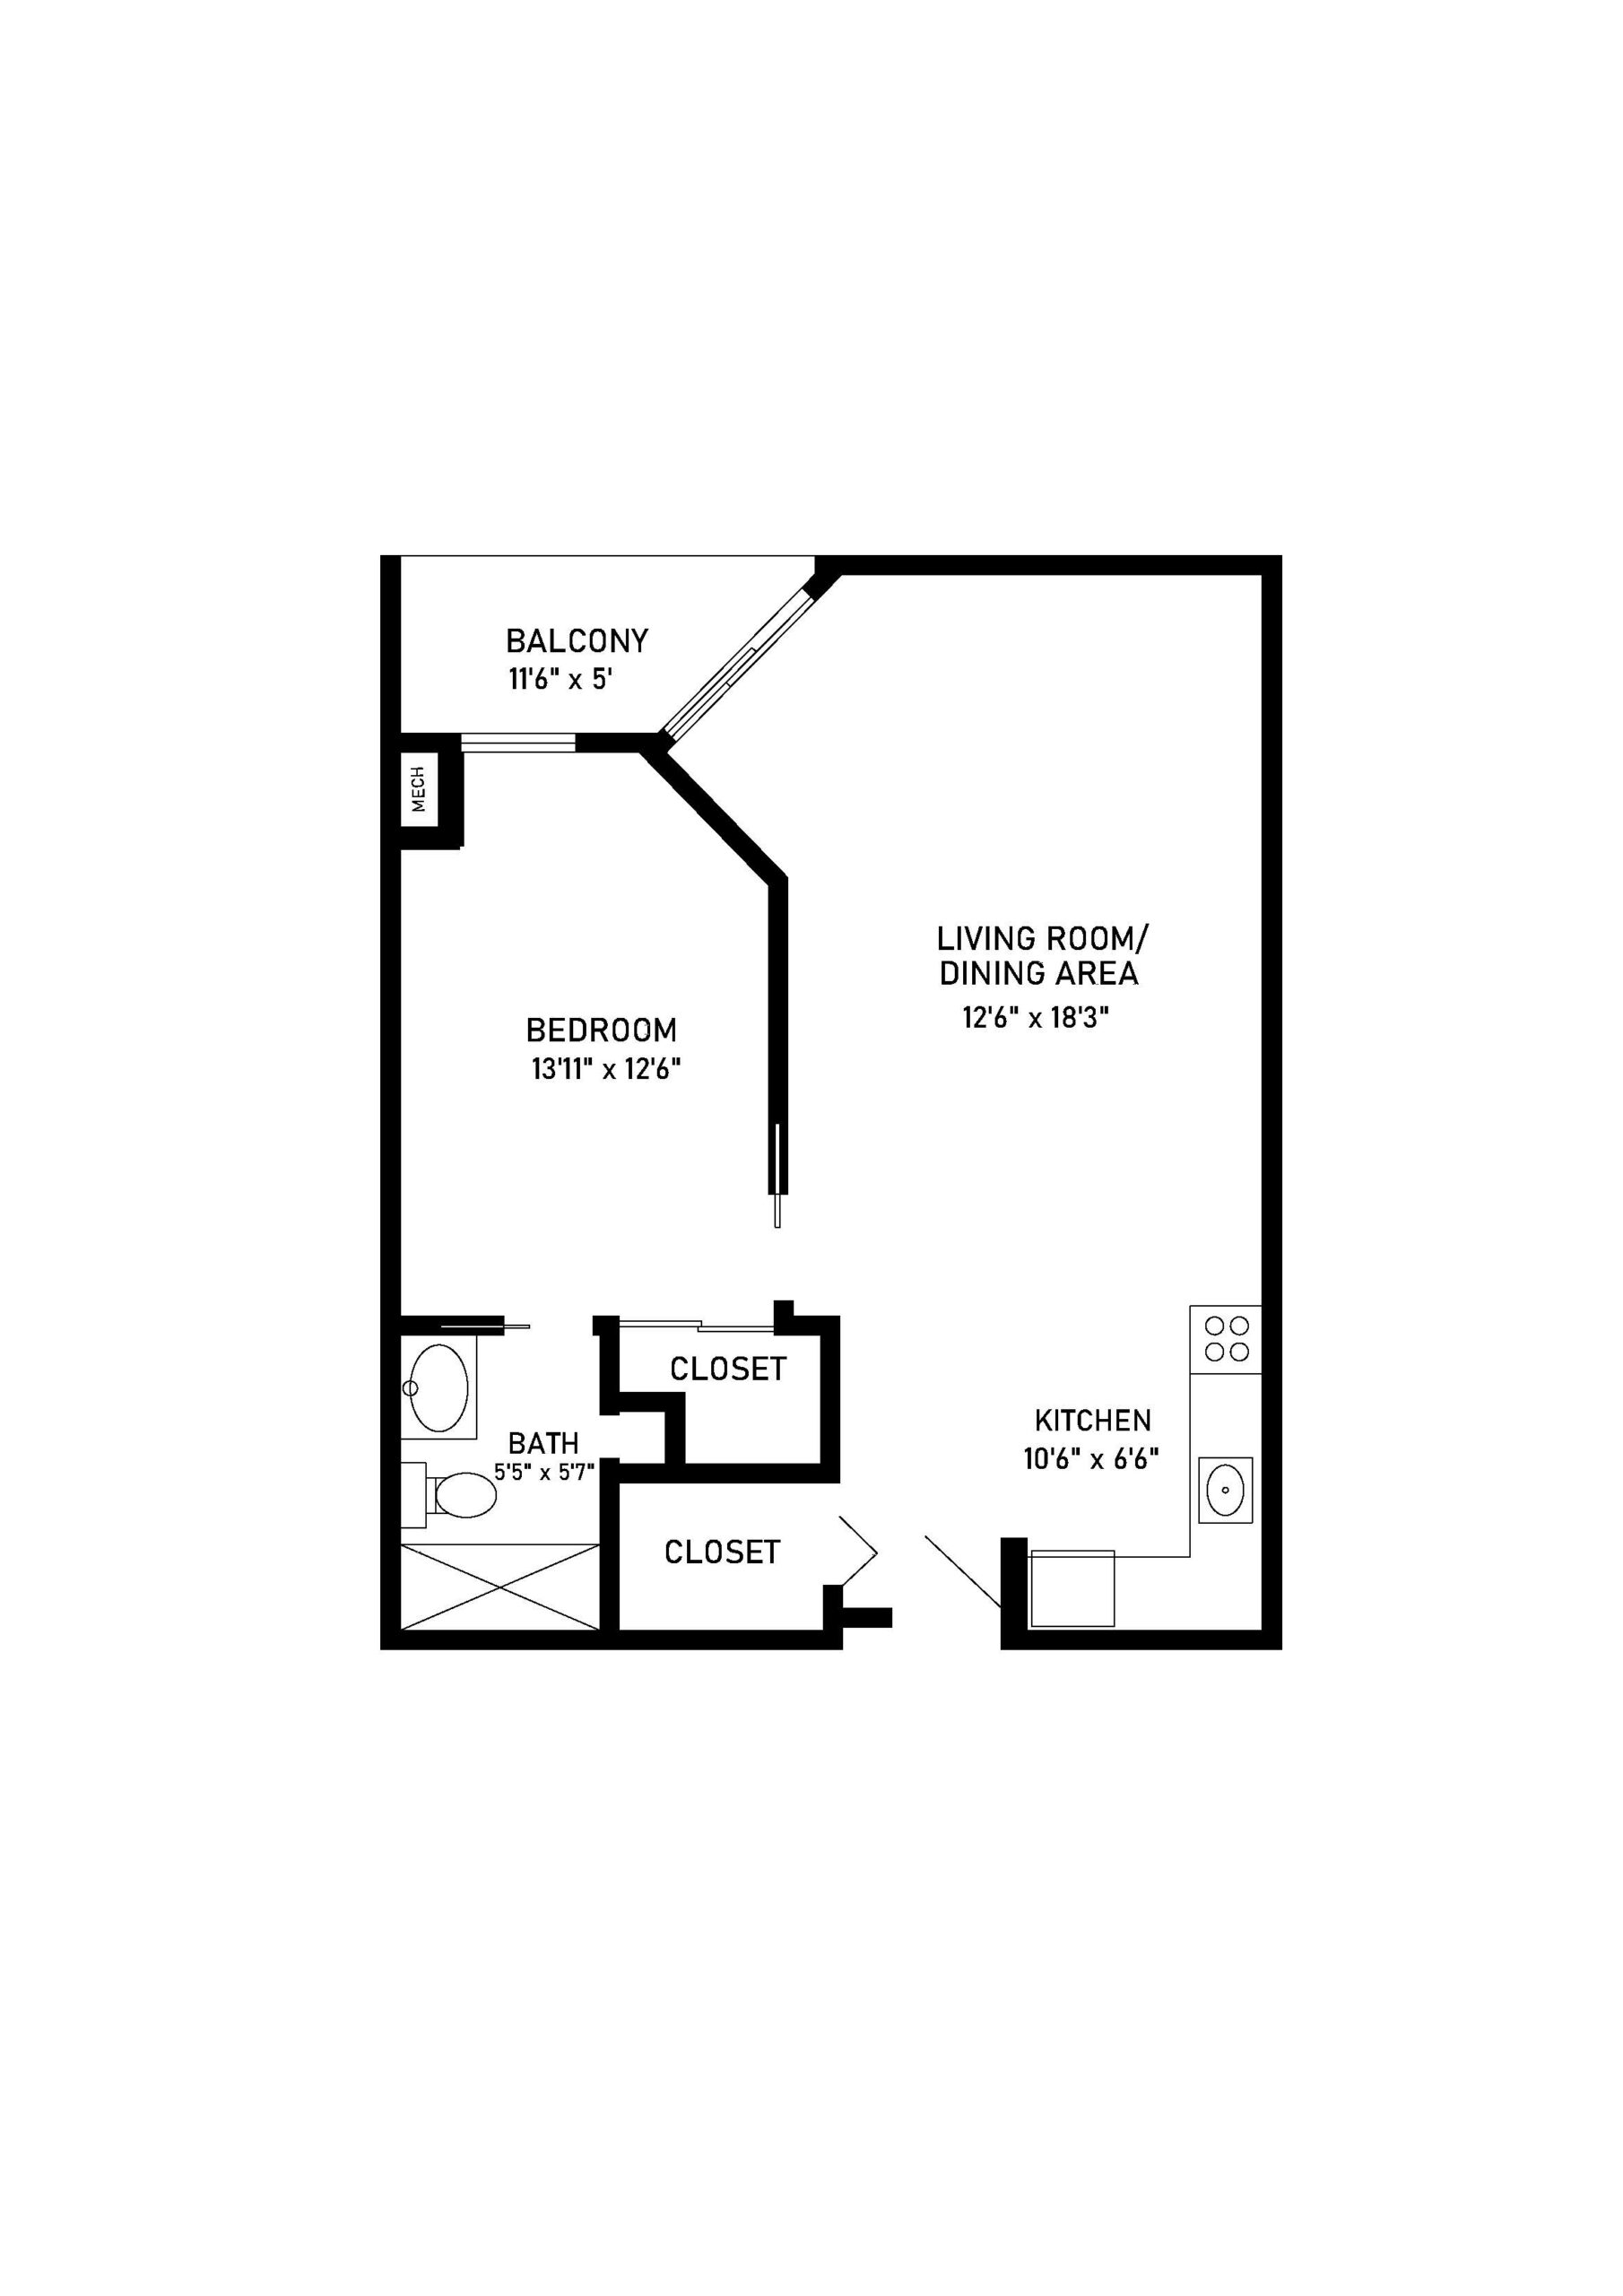 Birch 1 bed 1 bath apartment floor plan